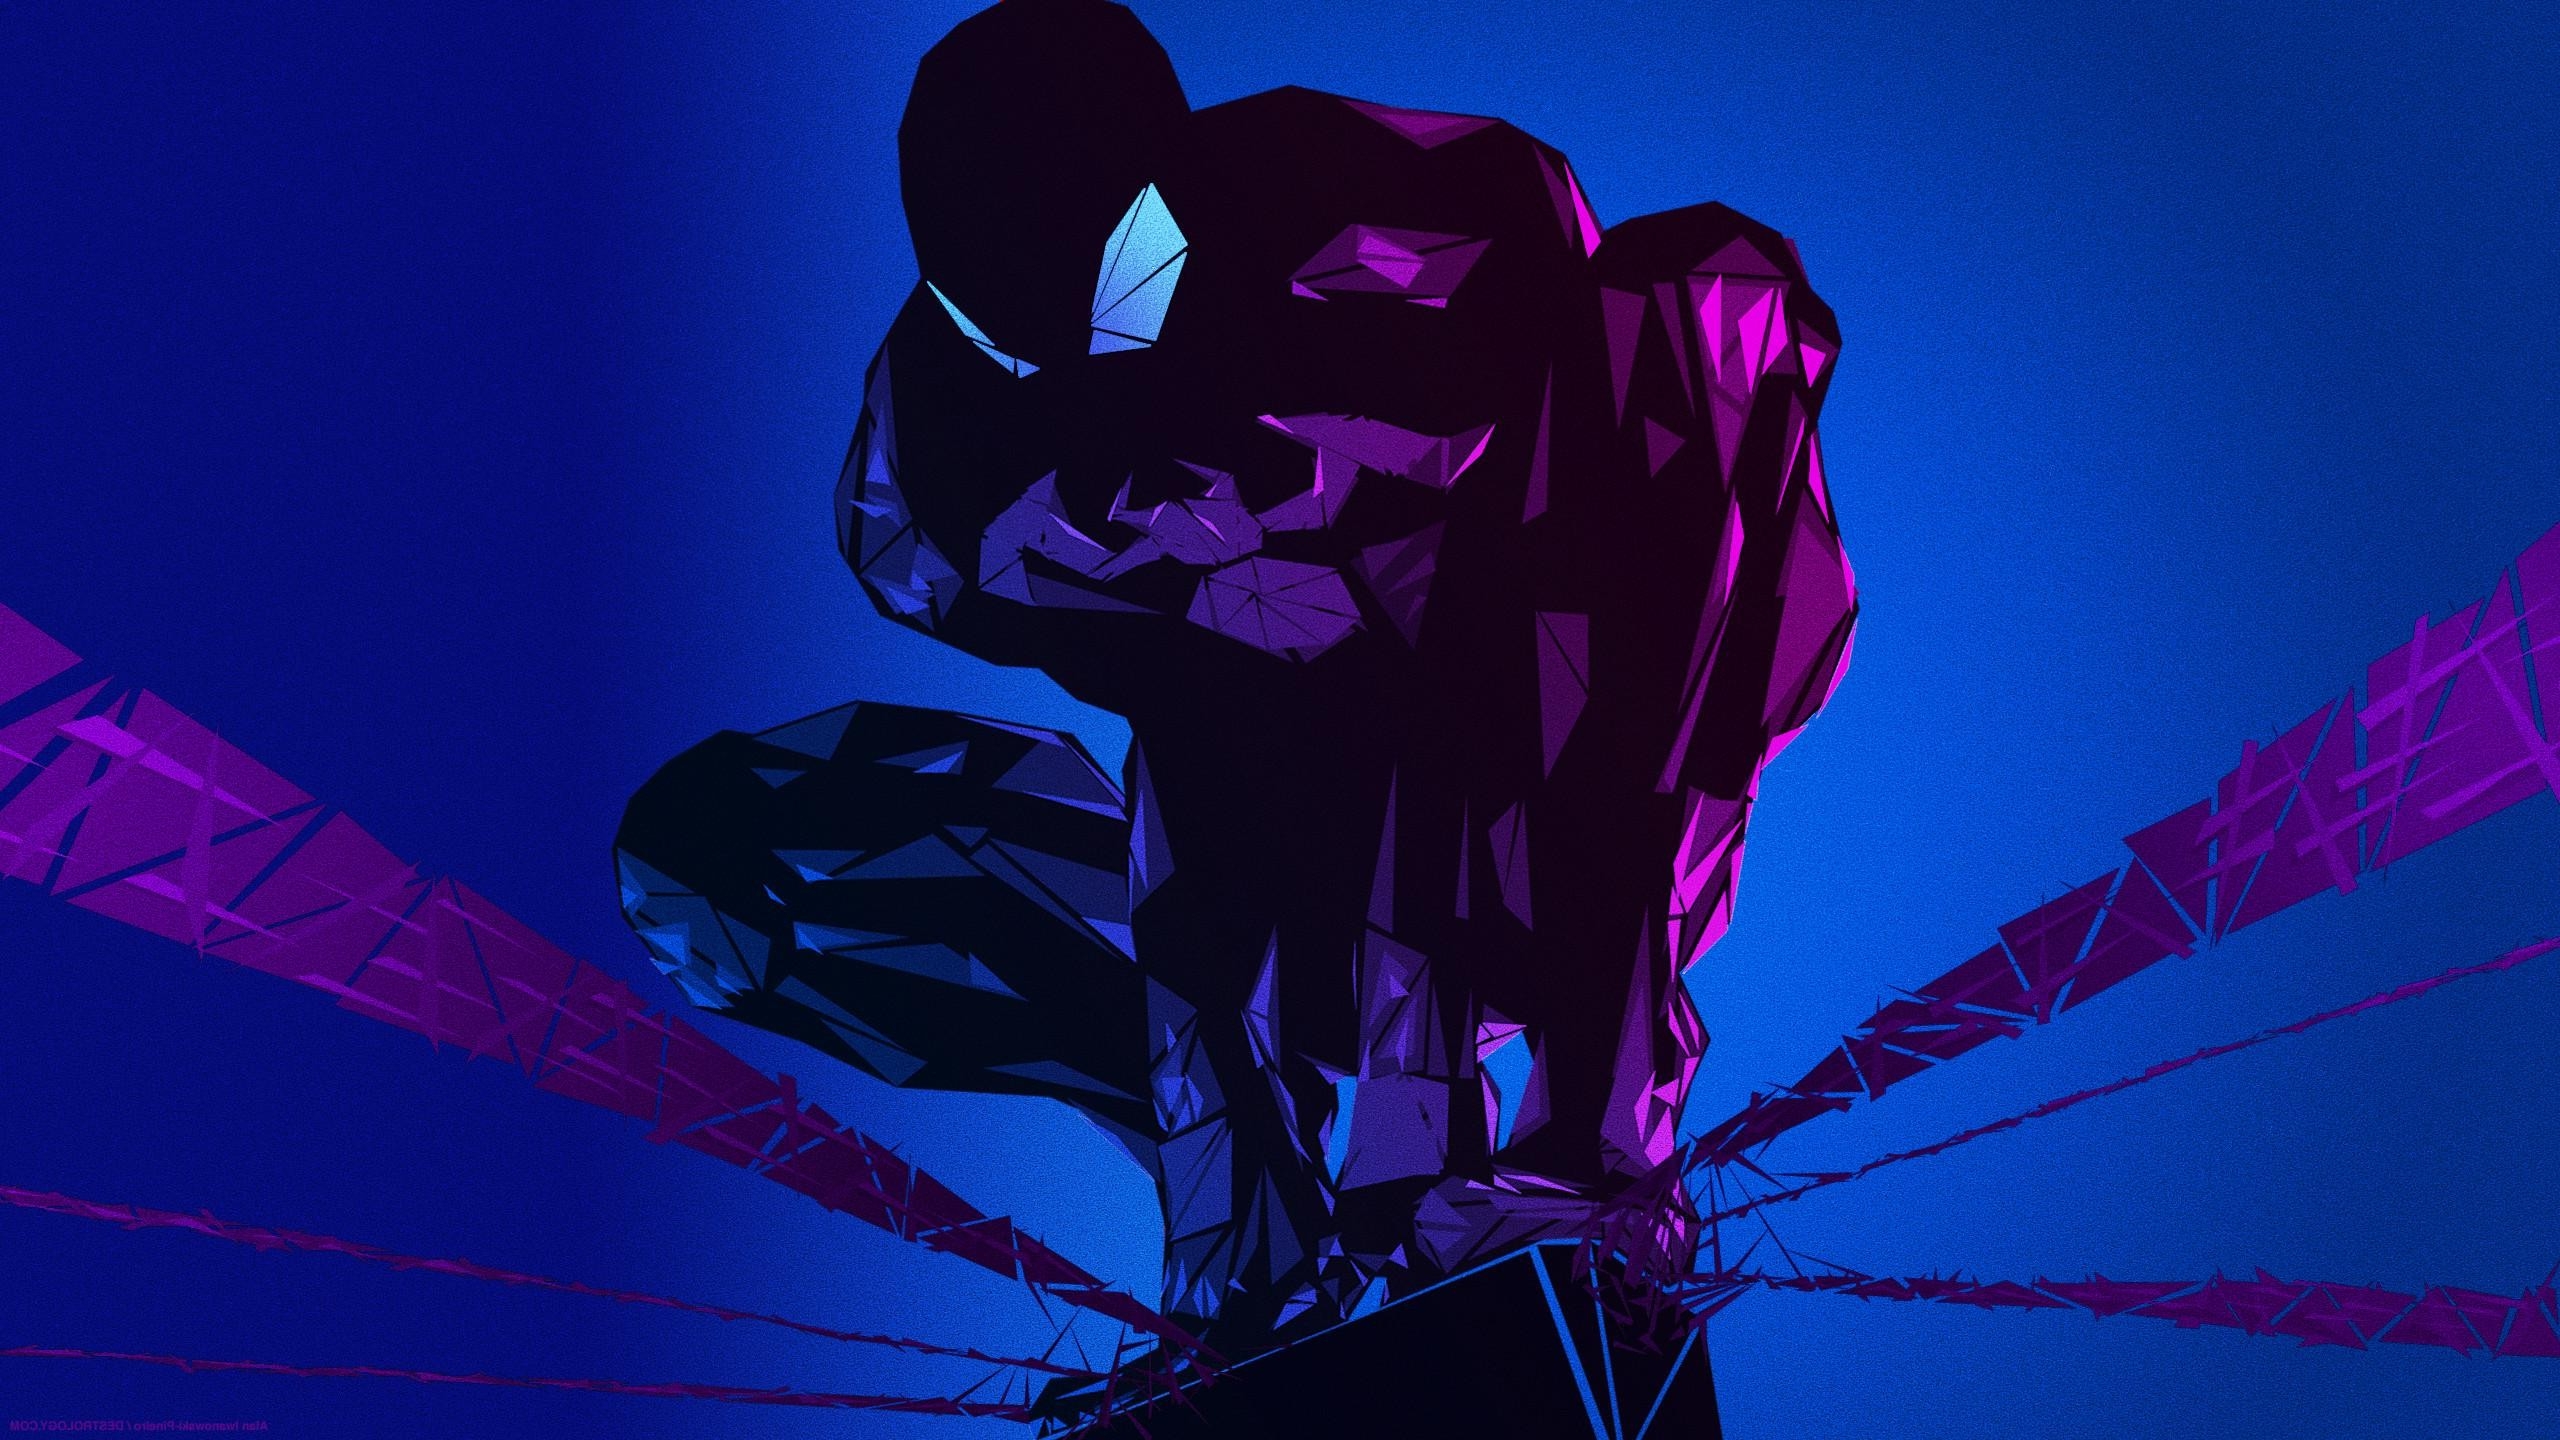 Download 2560x1440 Spider Man, Artwork, Dark, Blue Theme Wallpaper For IMac 27 Inch